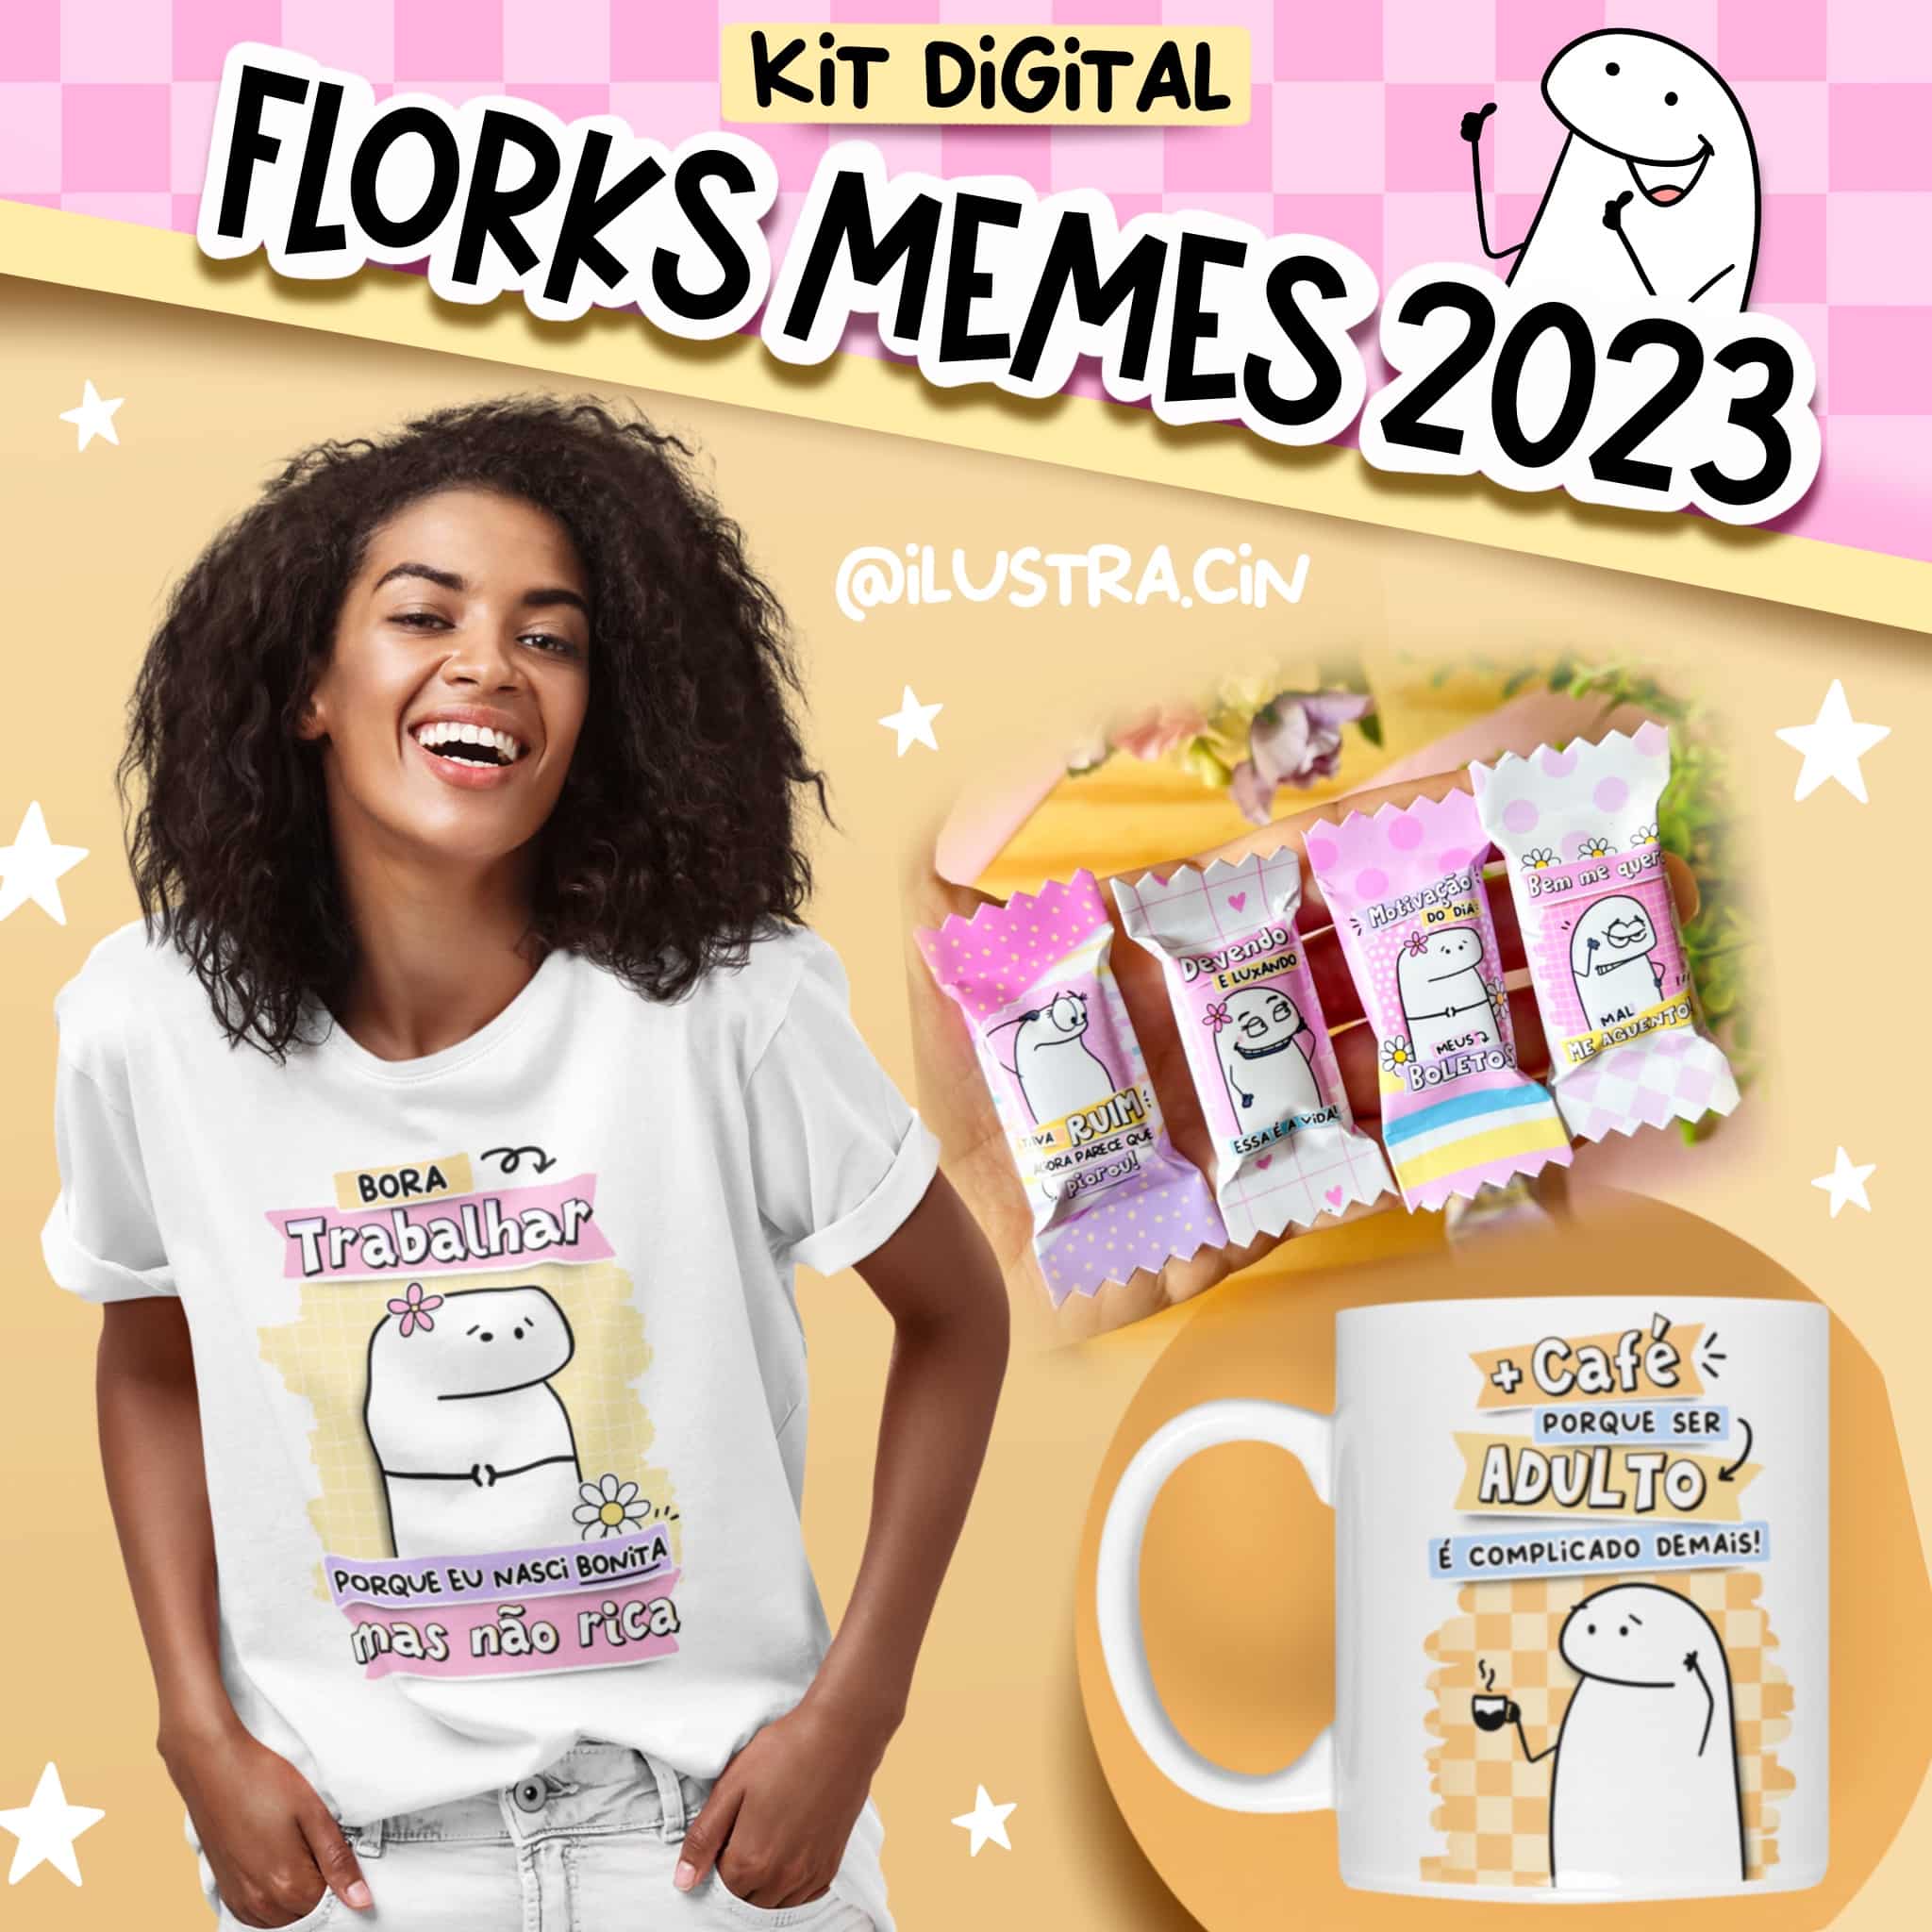 Kit Digital Dia dos Namorados Flork Meme